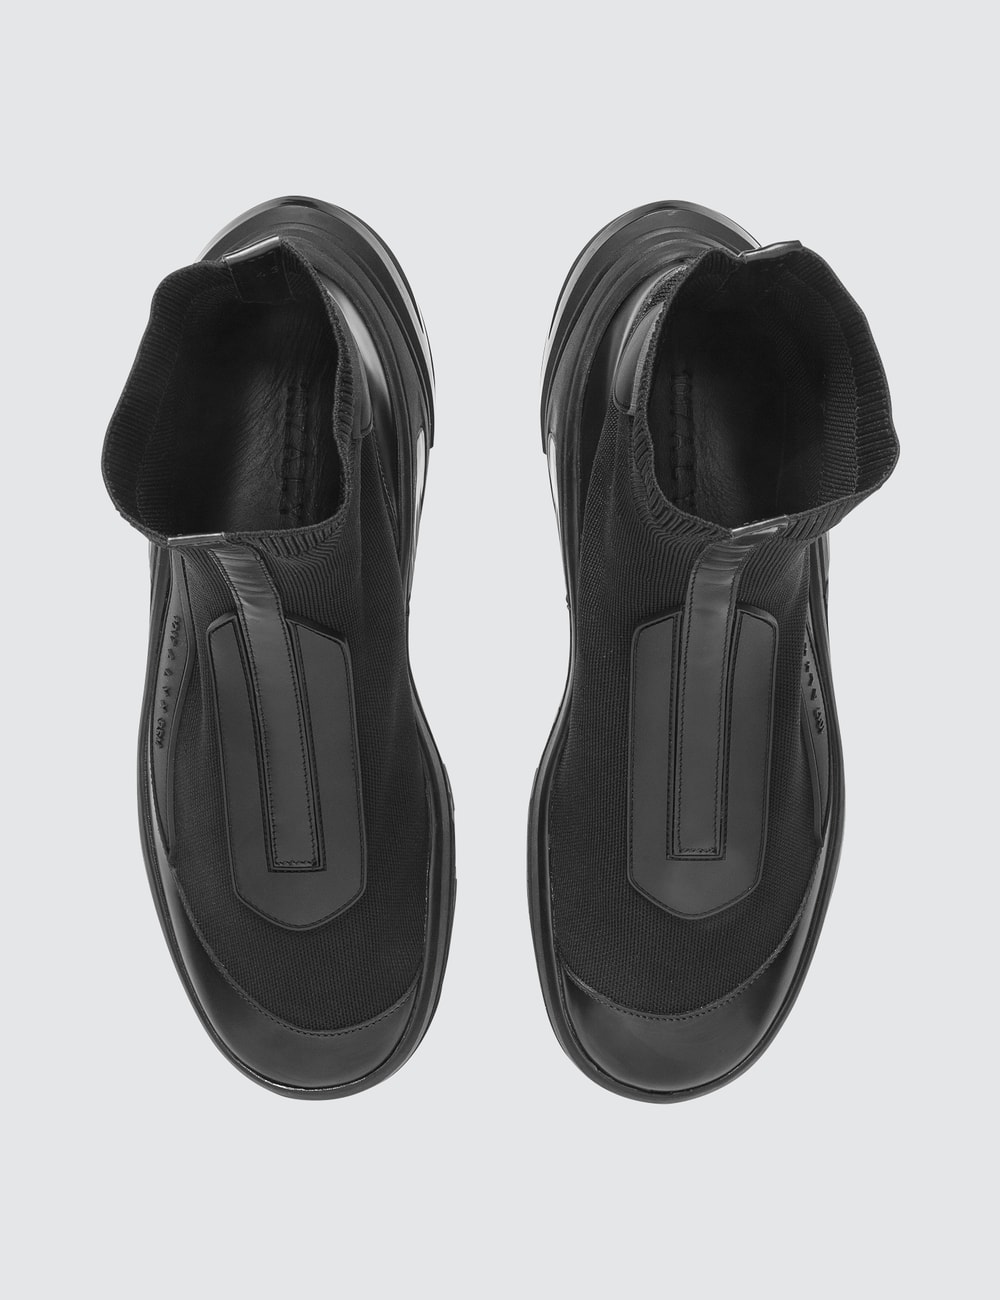 1017 ALYX 9SM - Chelsea Boots With Removable Vibram Sole | HBX